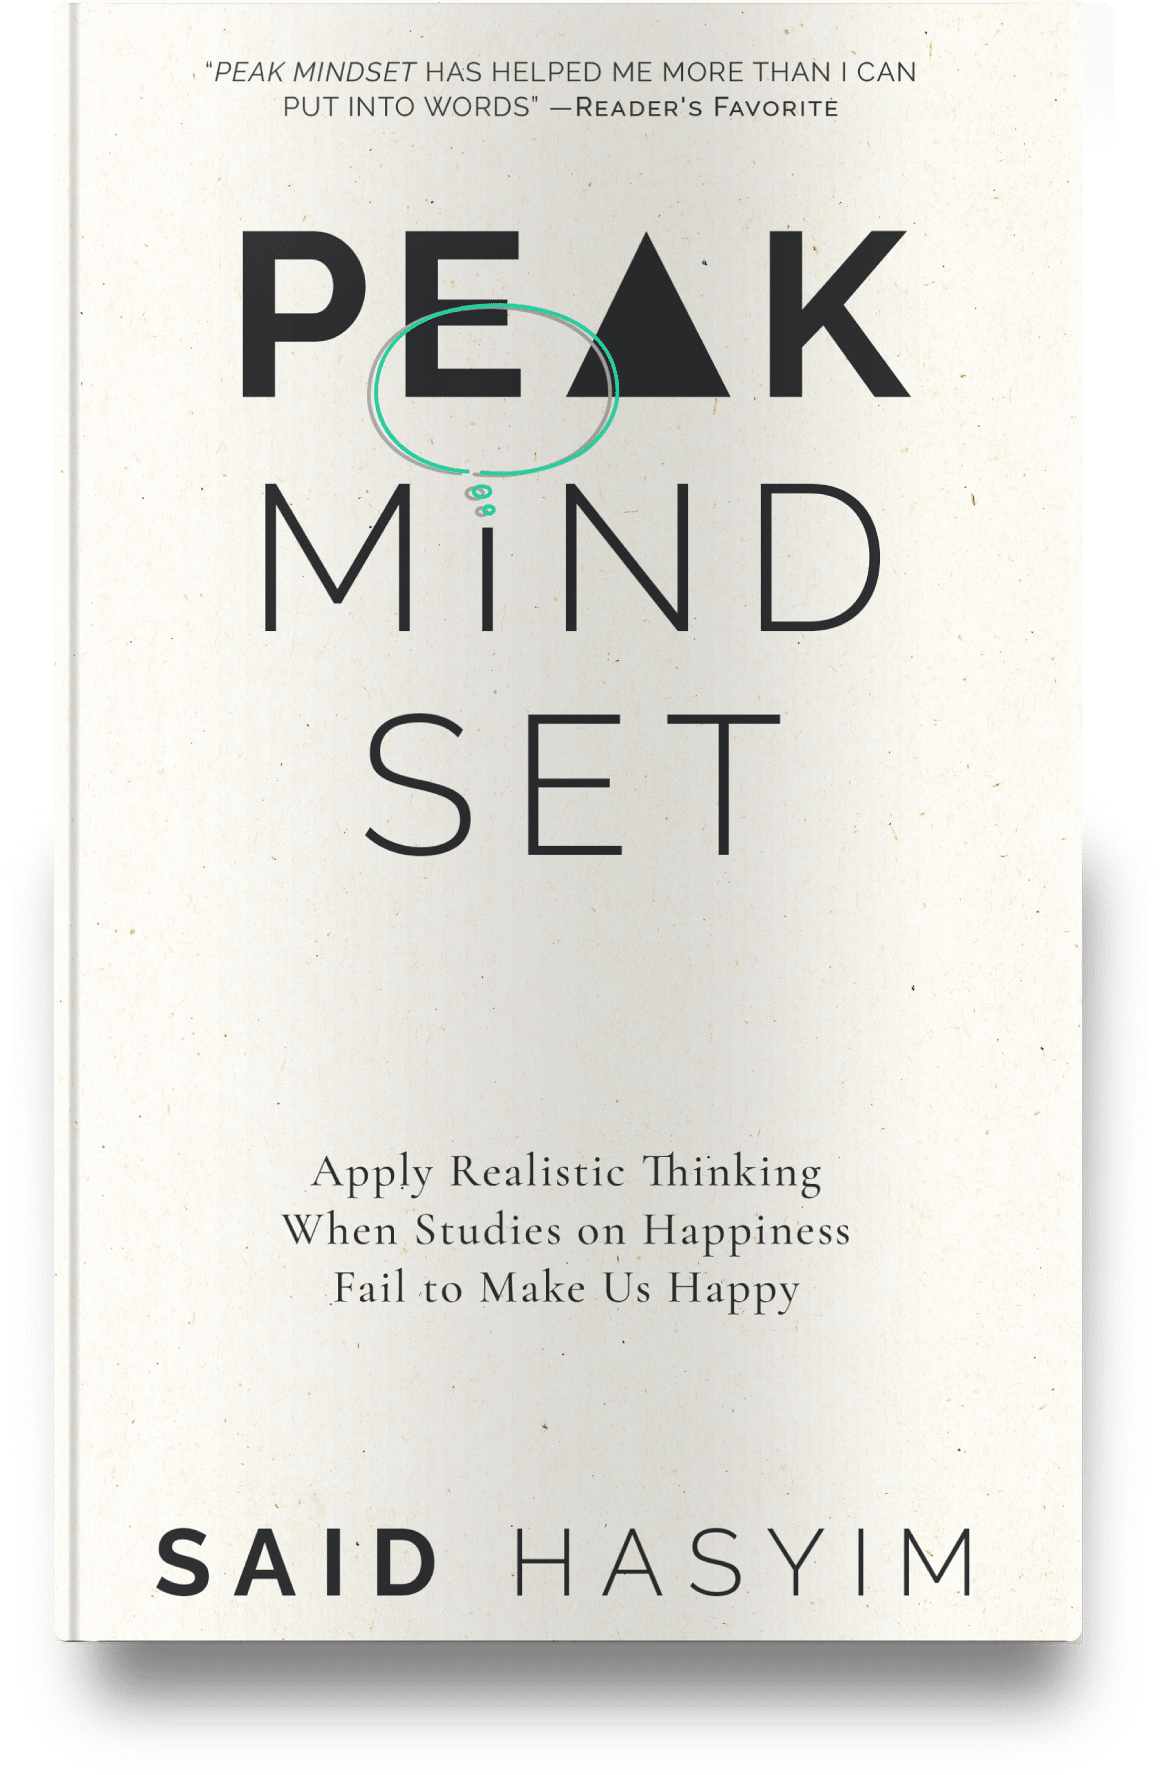 Peak Mindset book cover